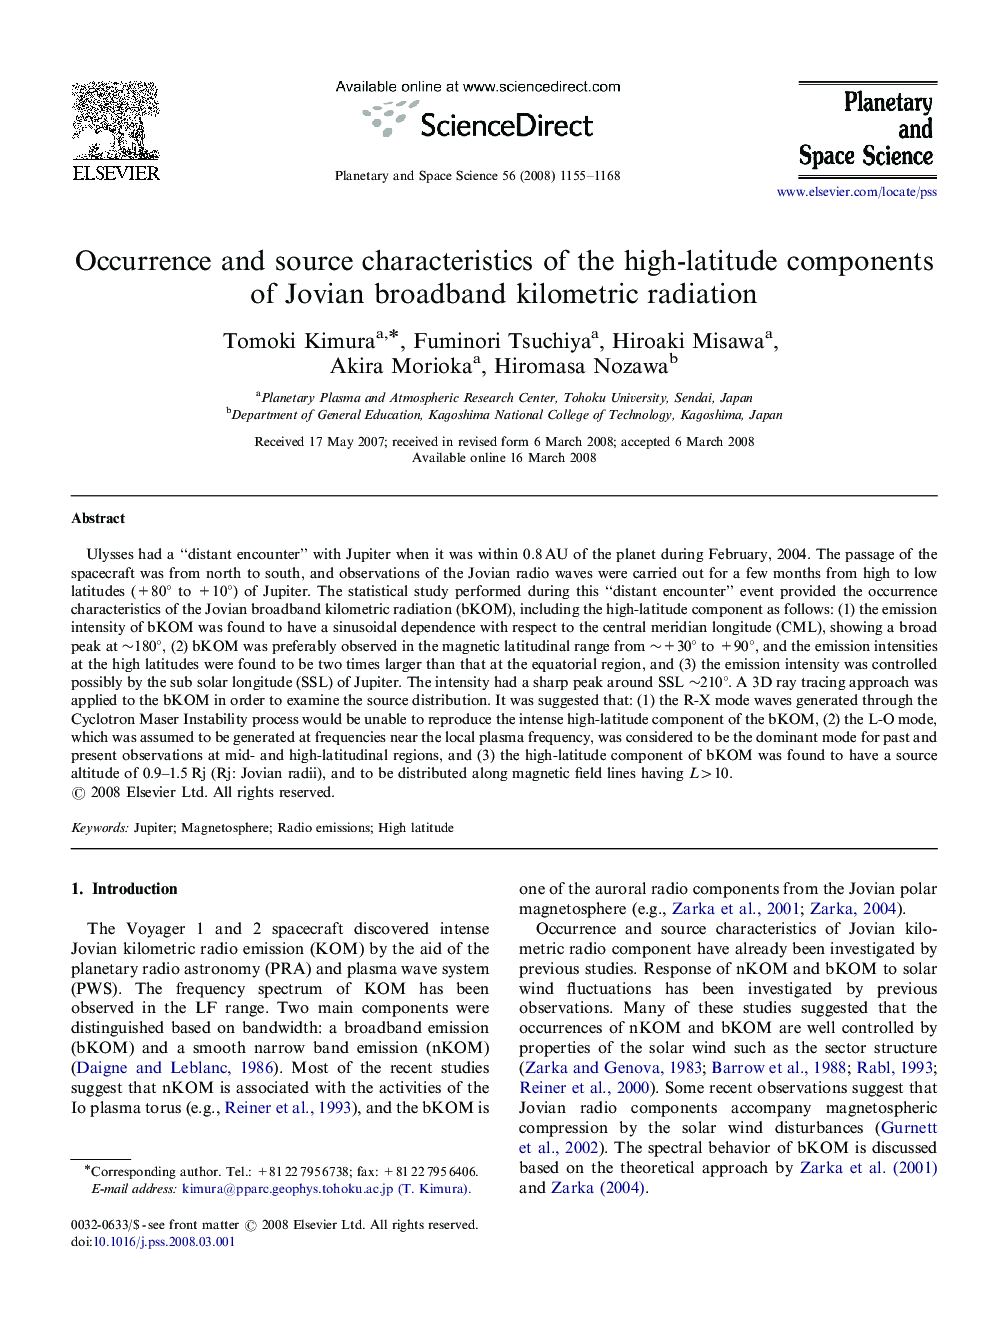 Occurrence and source characteristics of the high-latitude components of Jovian broadband kilometric radiation